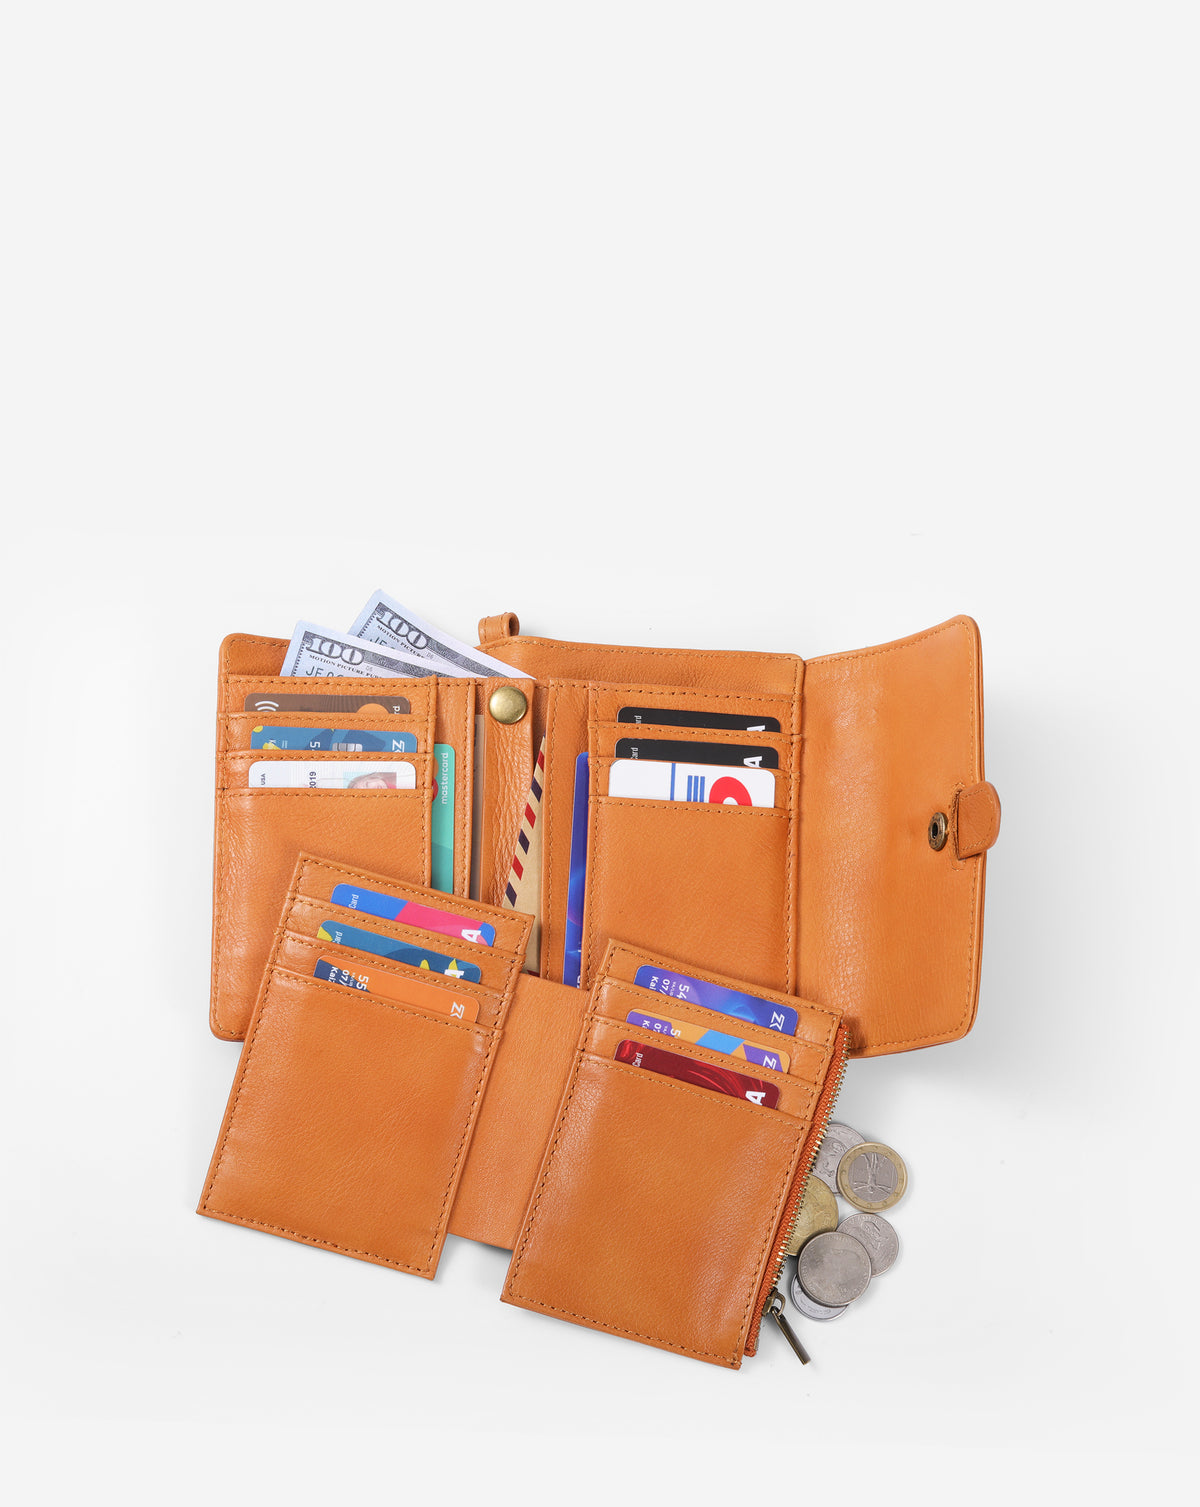 Robin Wallet / Card holder.